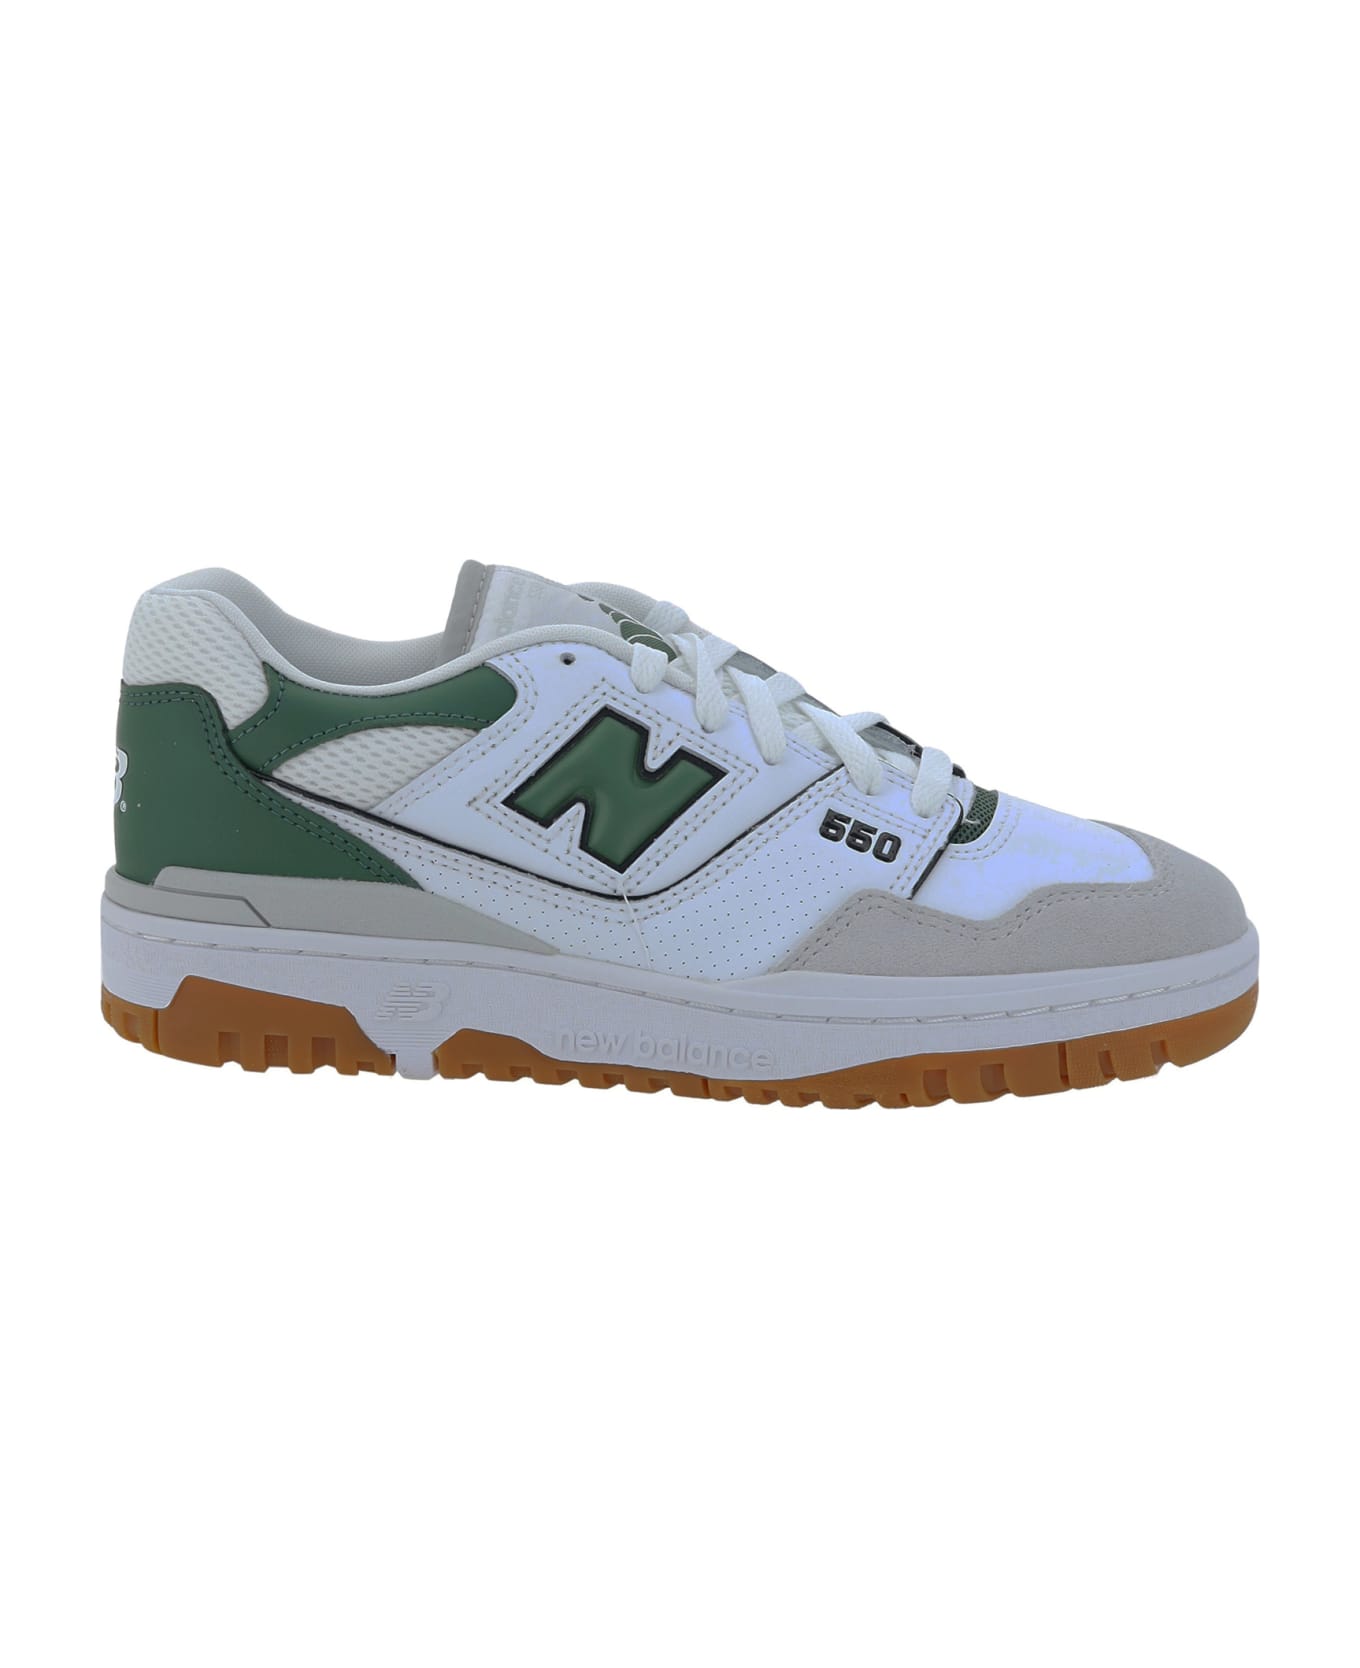 New Balance 550 Sneakers - White/green スニーカー